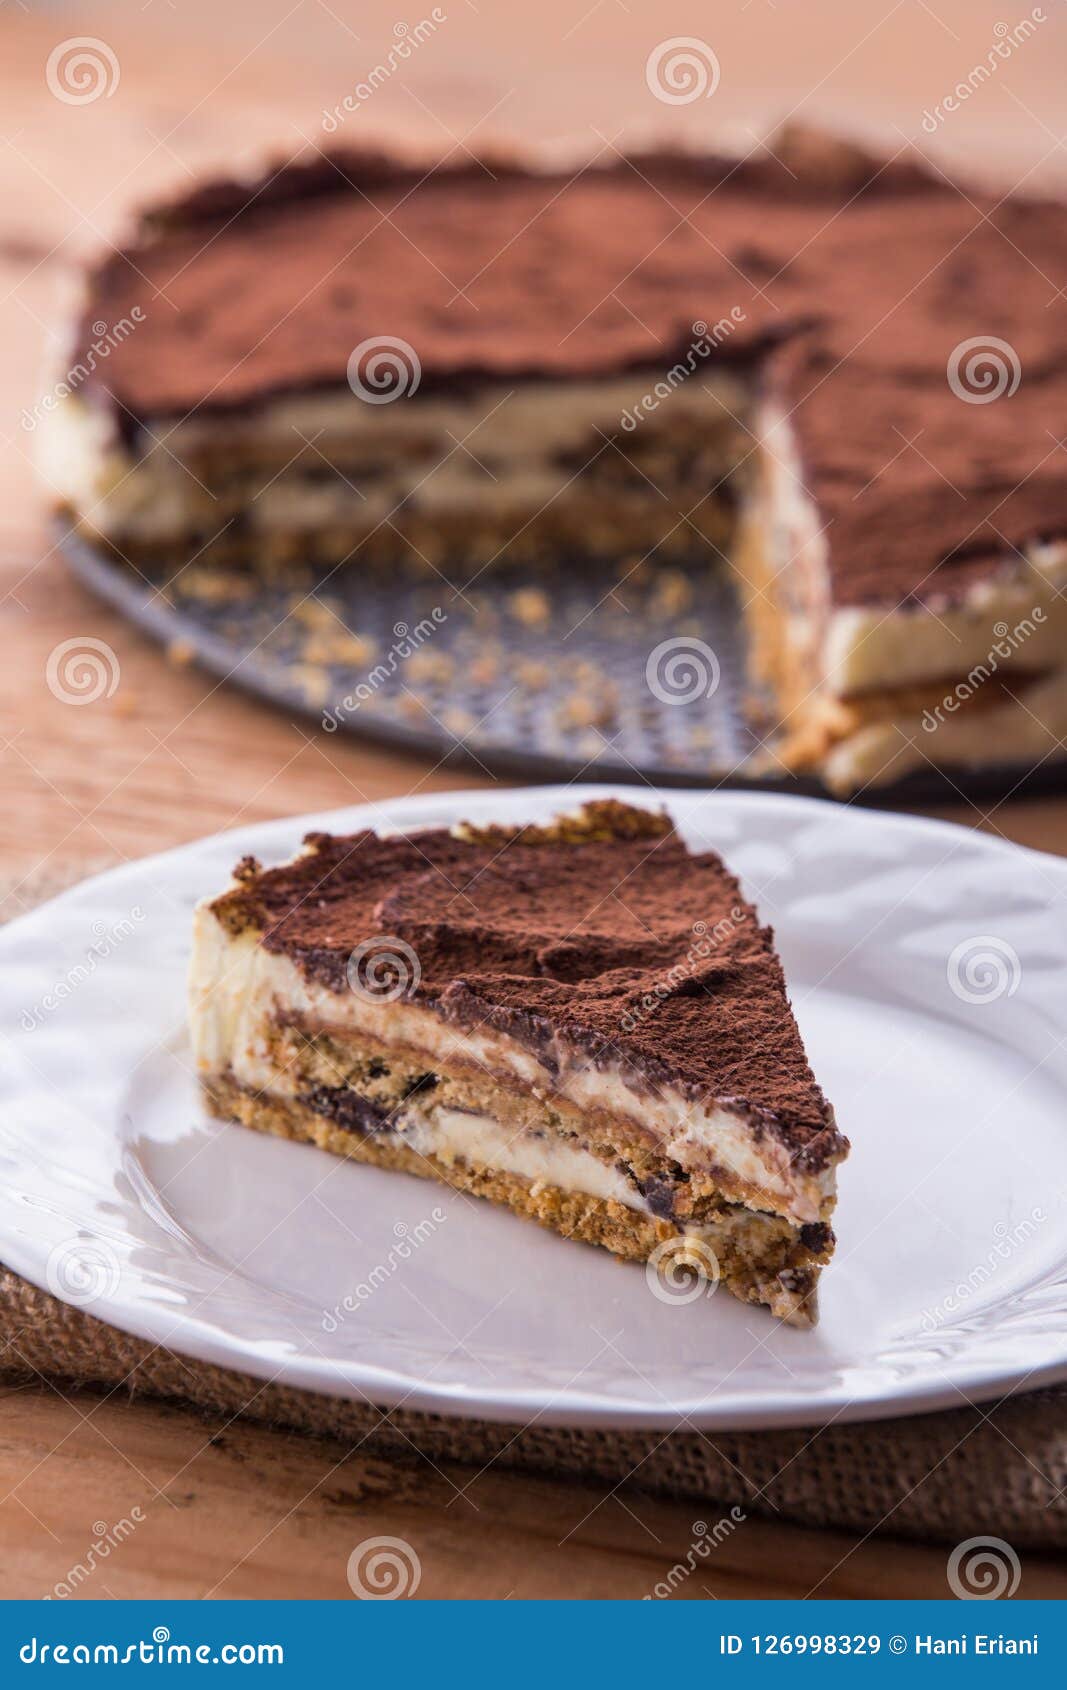 A Slice Of Tiramisu Cake Served On White Plate Stock Image Image Of Elegance Calories